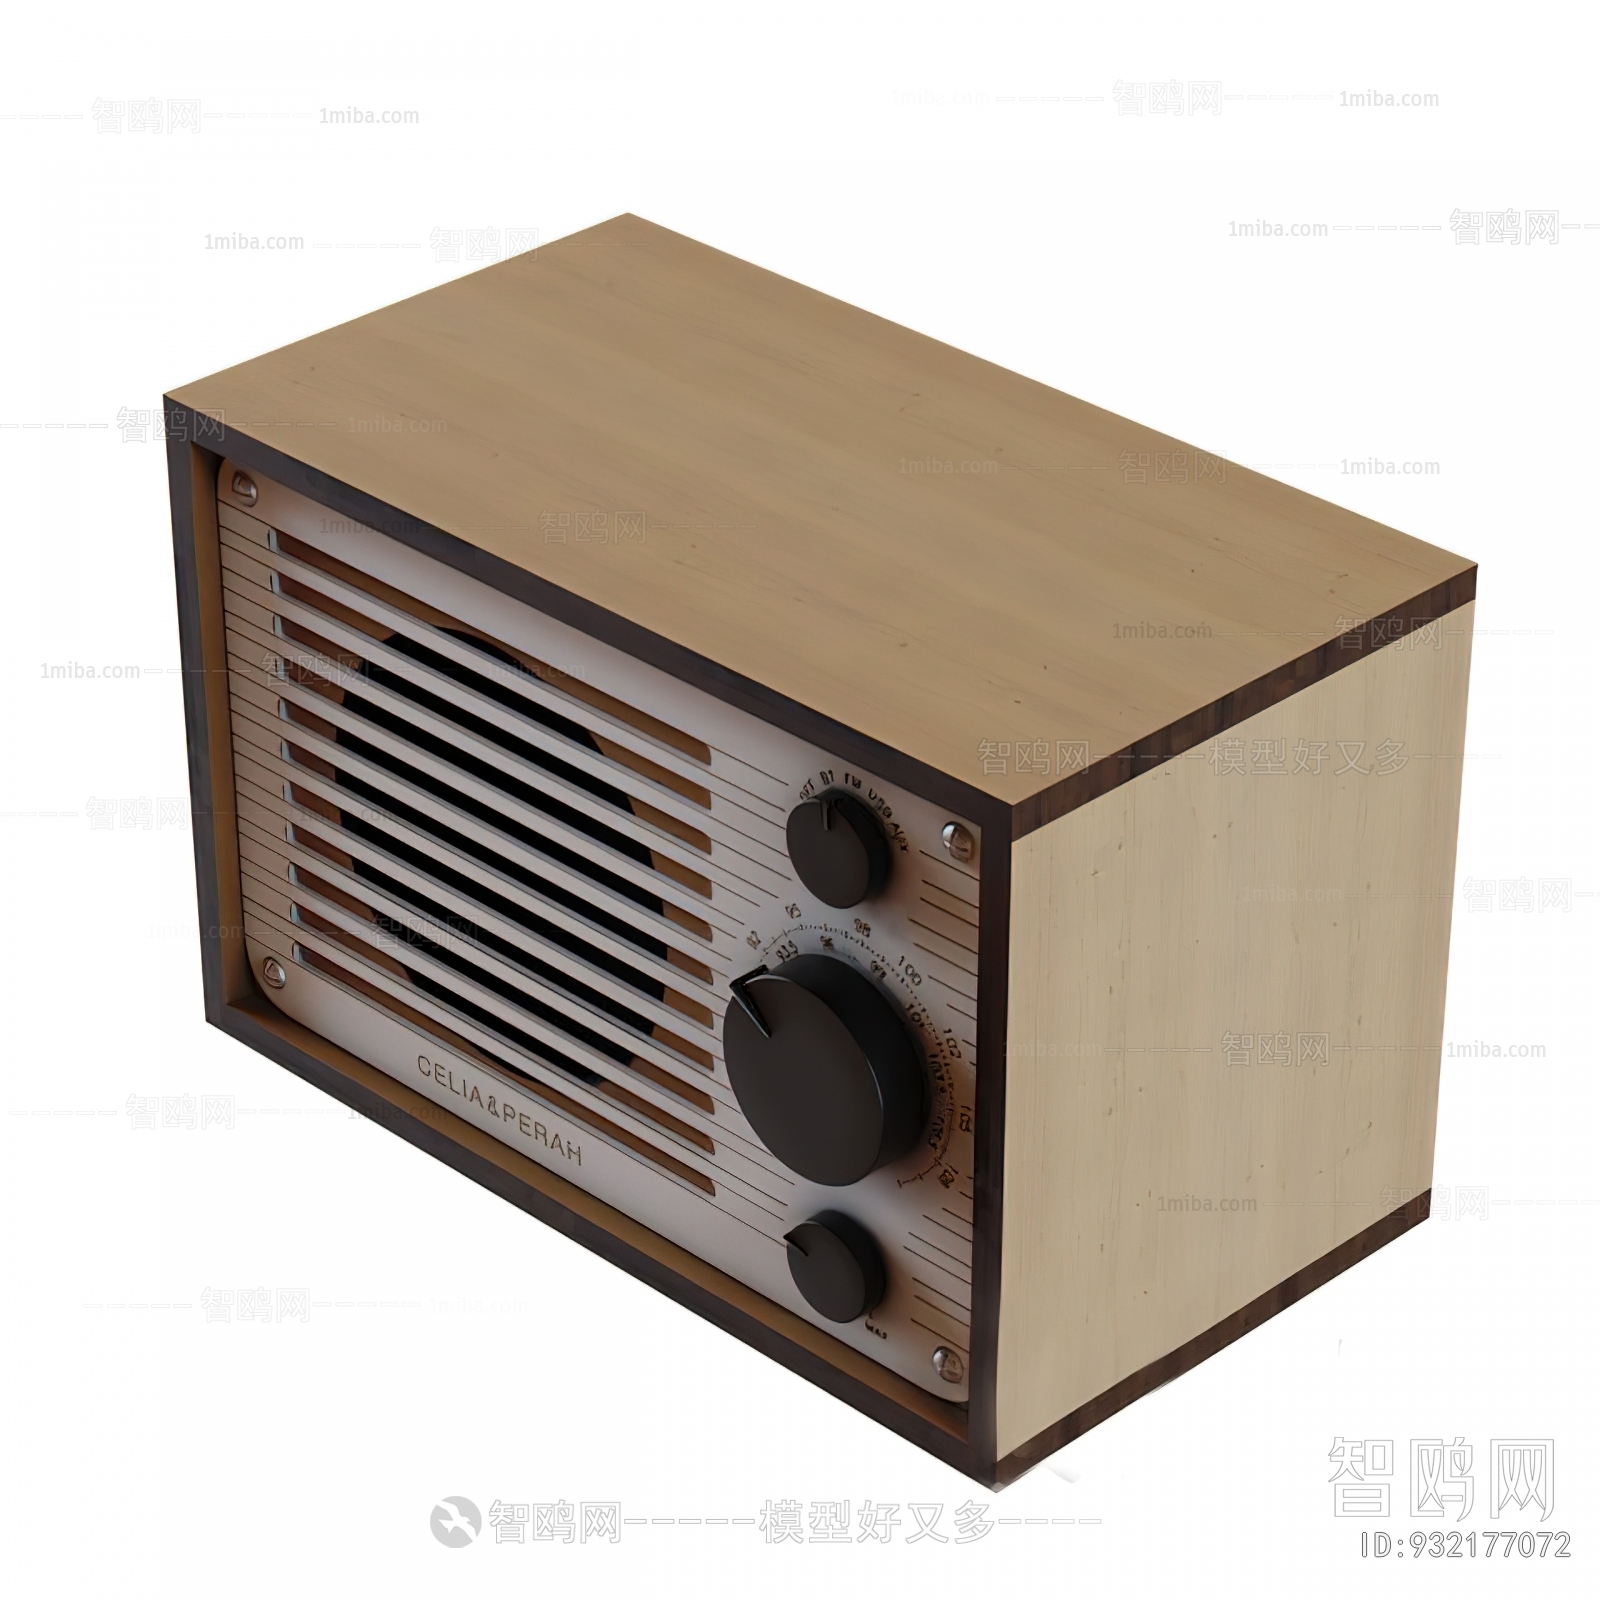 Retro Style Sound Box